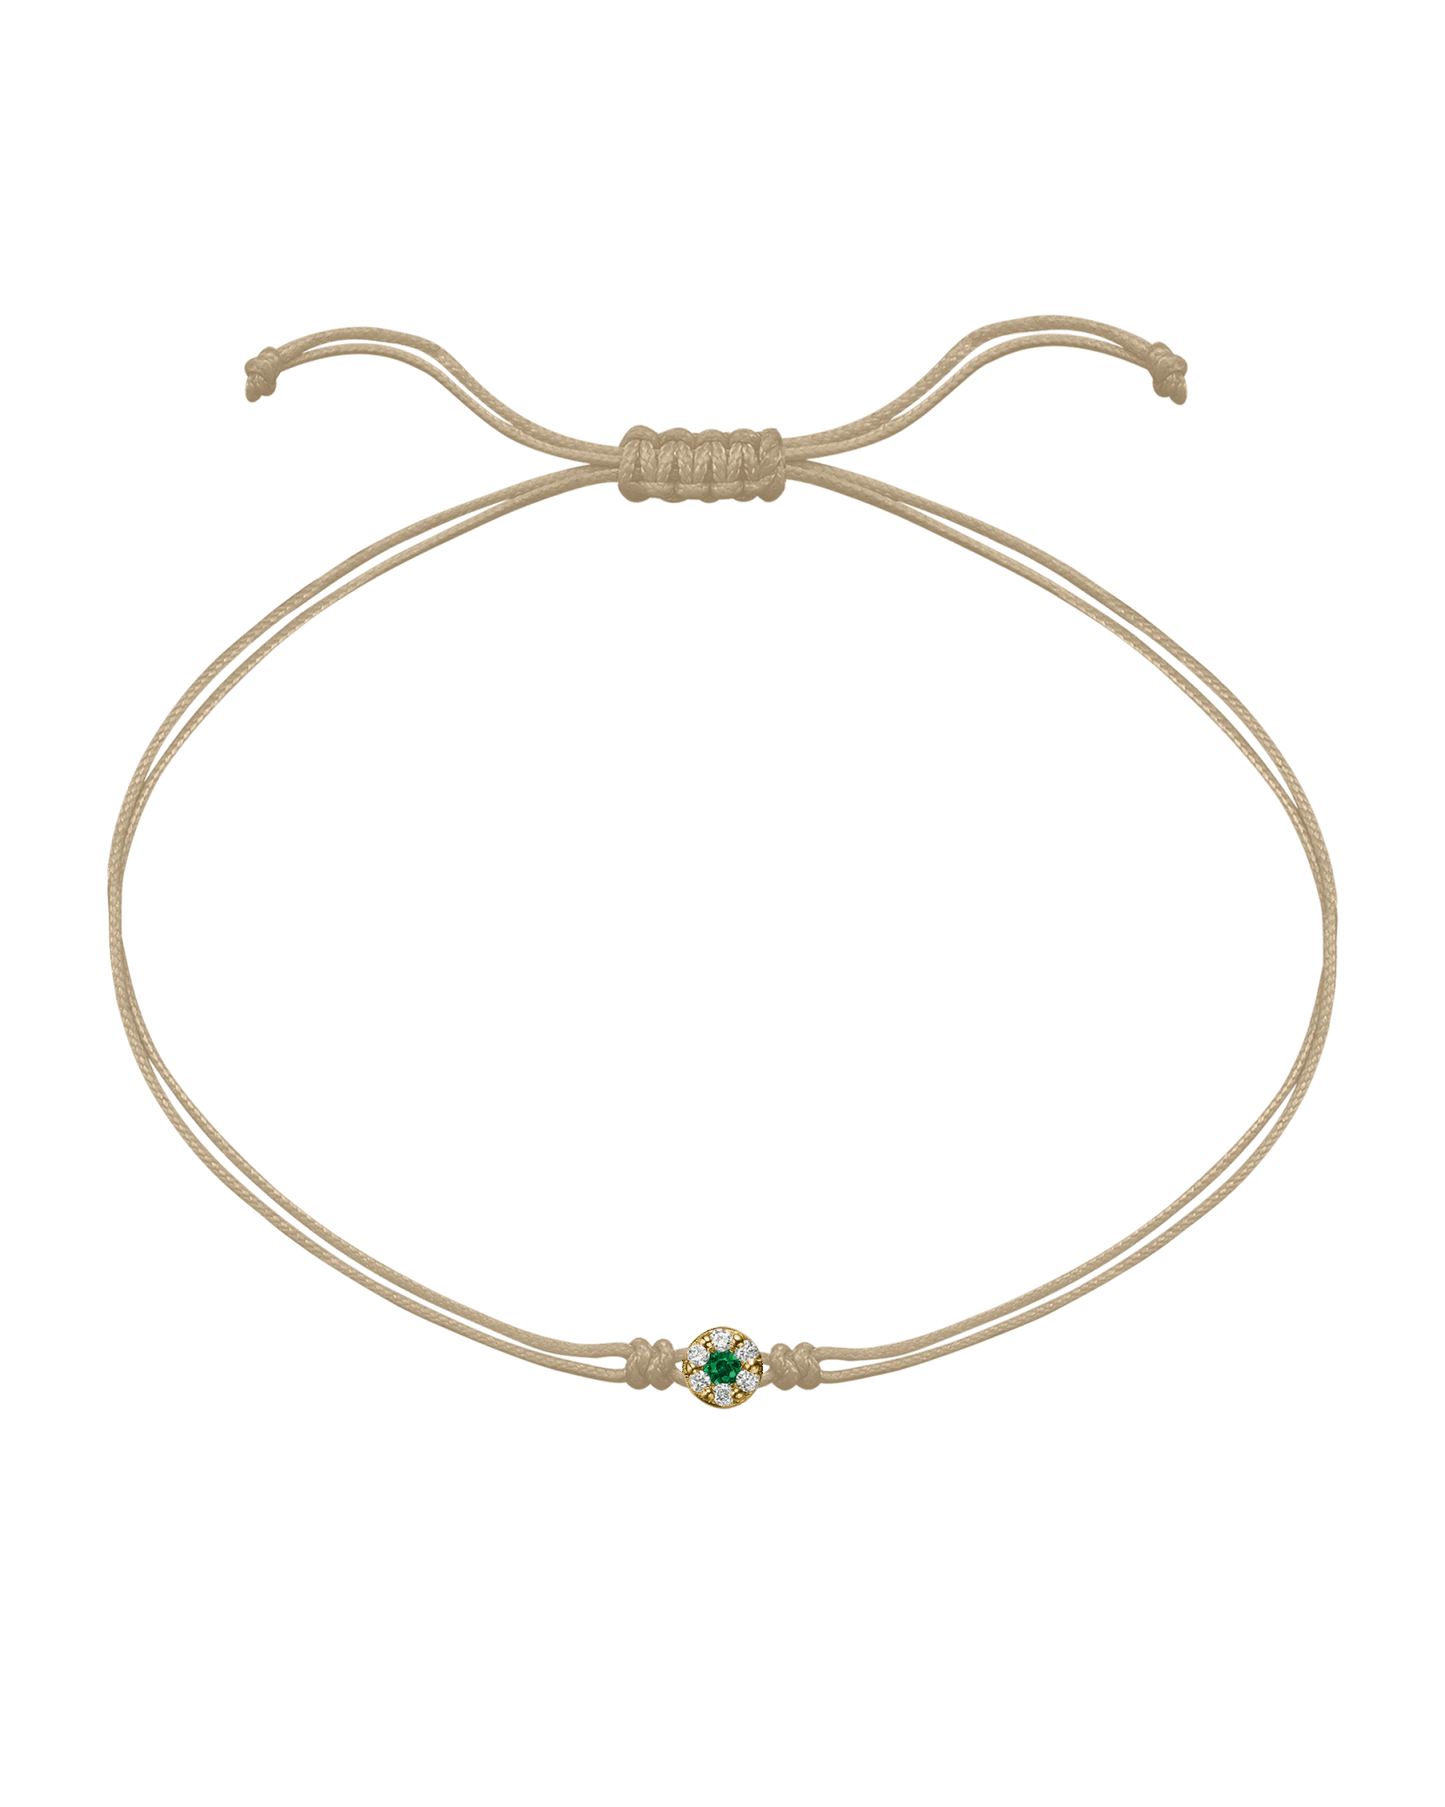 String of Love Diamond and Gemstone - 14K Yellow Gold Bracelet 14K Solid Gold Beige Emerald 